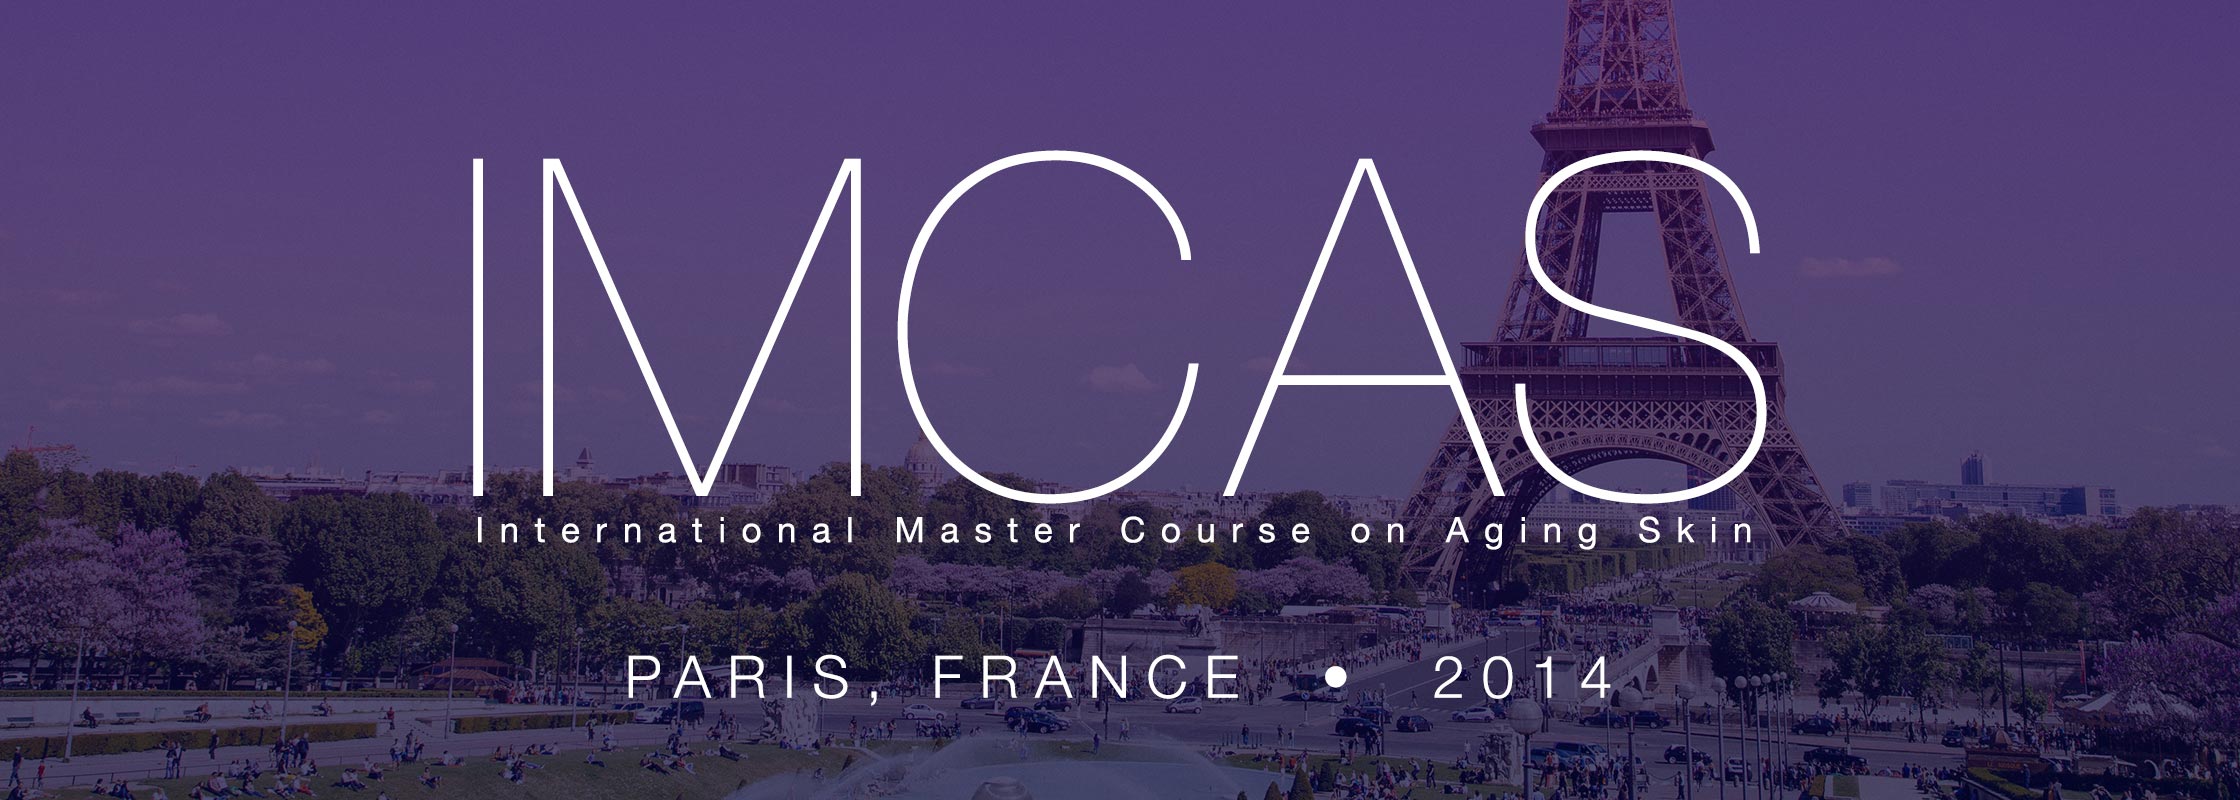 International Master Course on Aging Skin in Paris